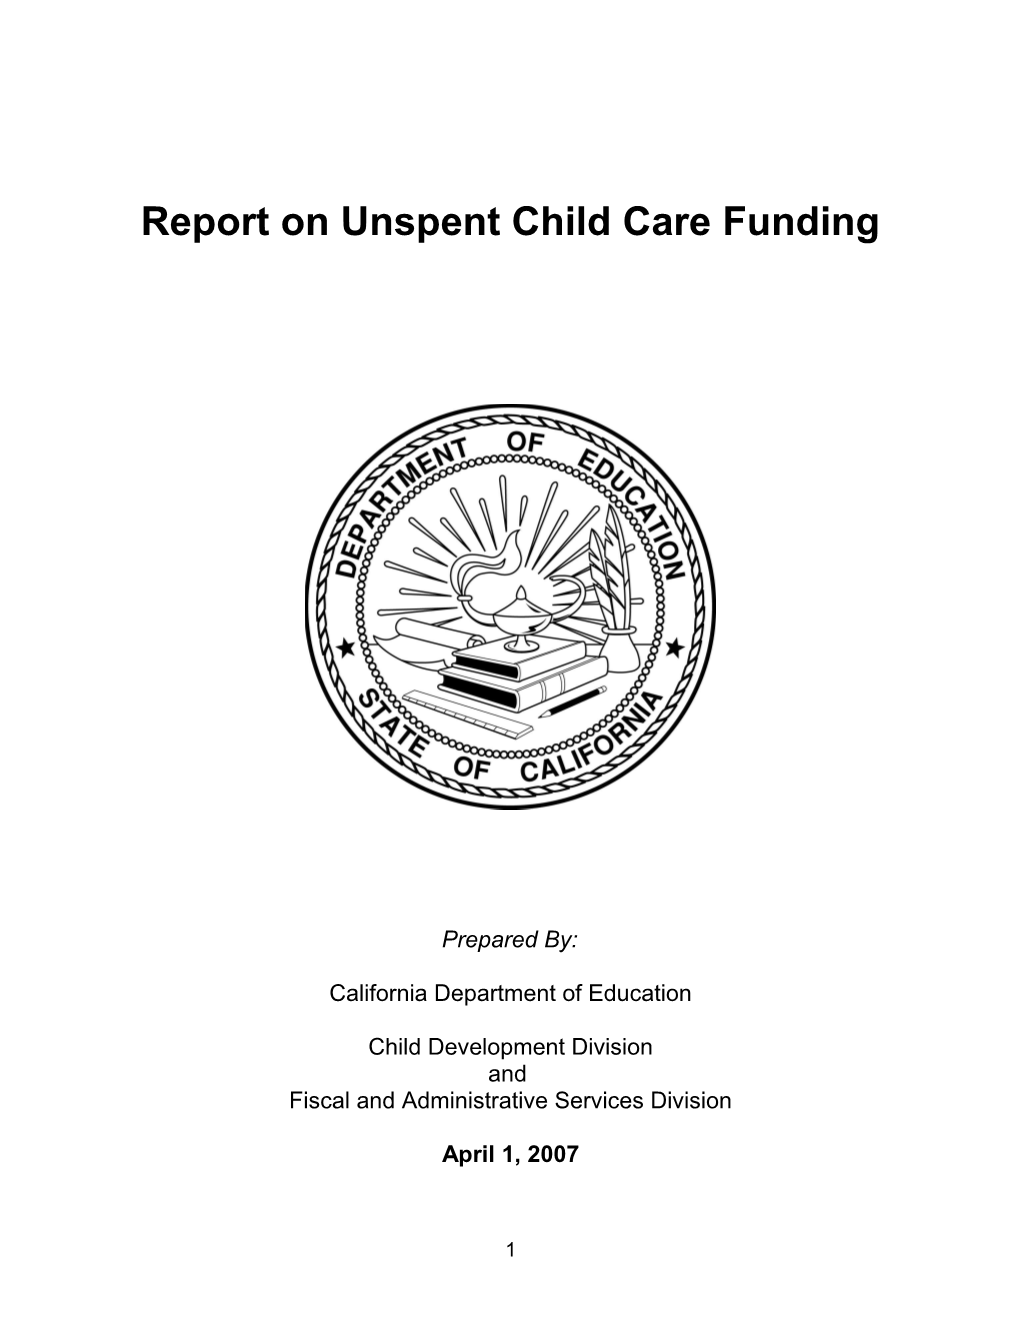 Unspent Funding 07 - Child Development (CA Dept of Education)